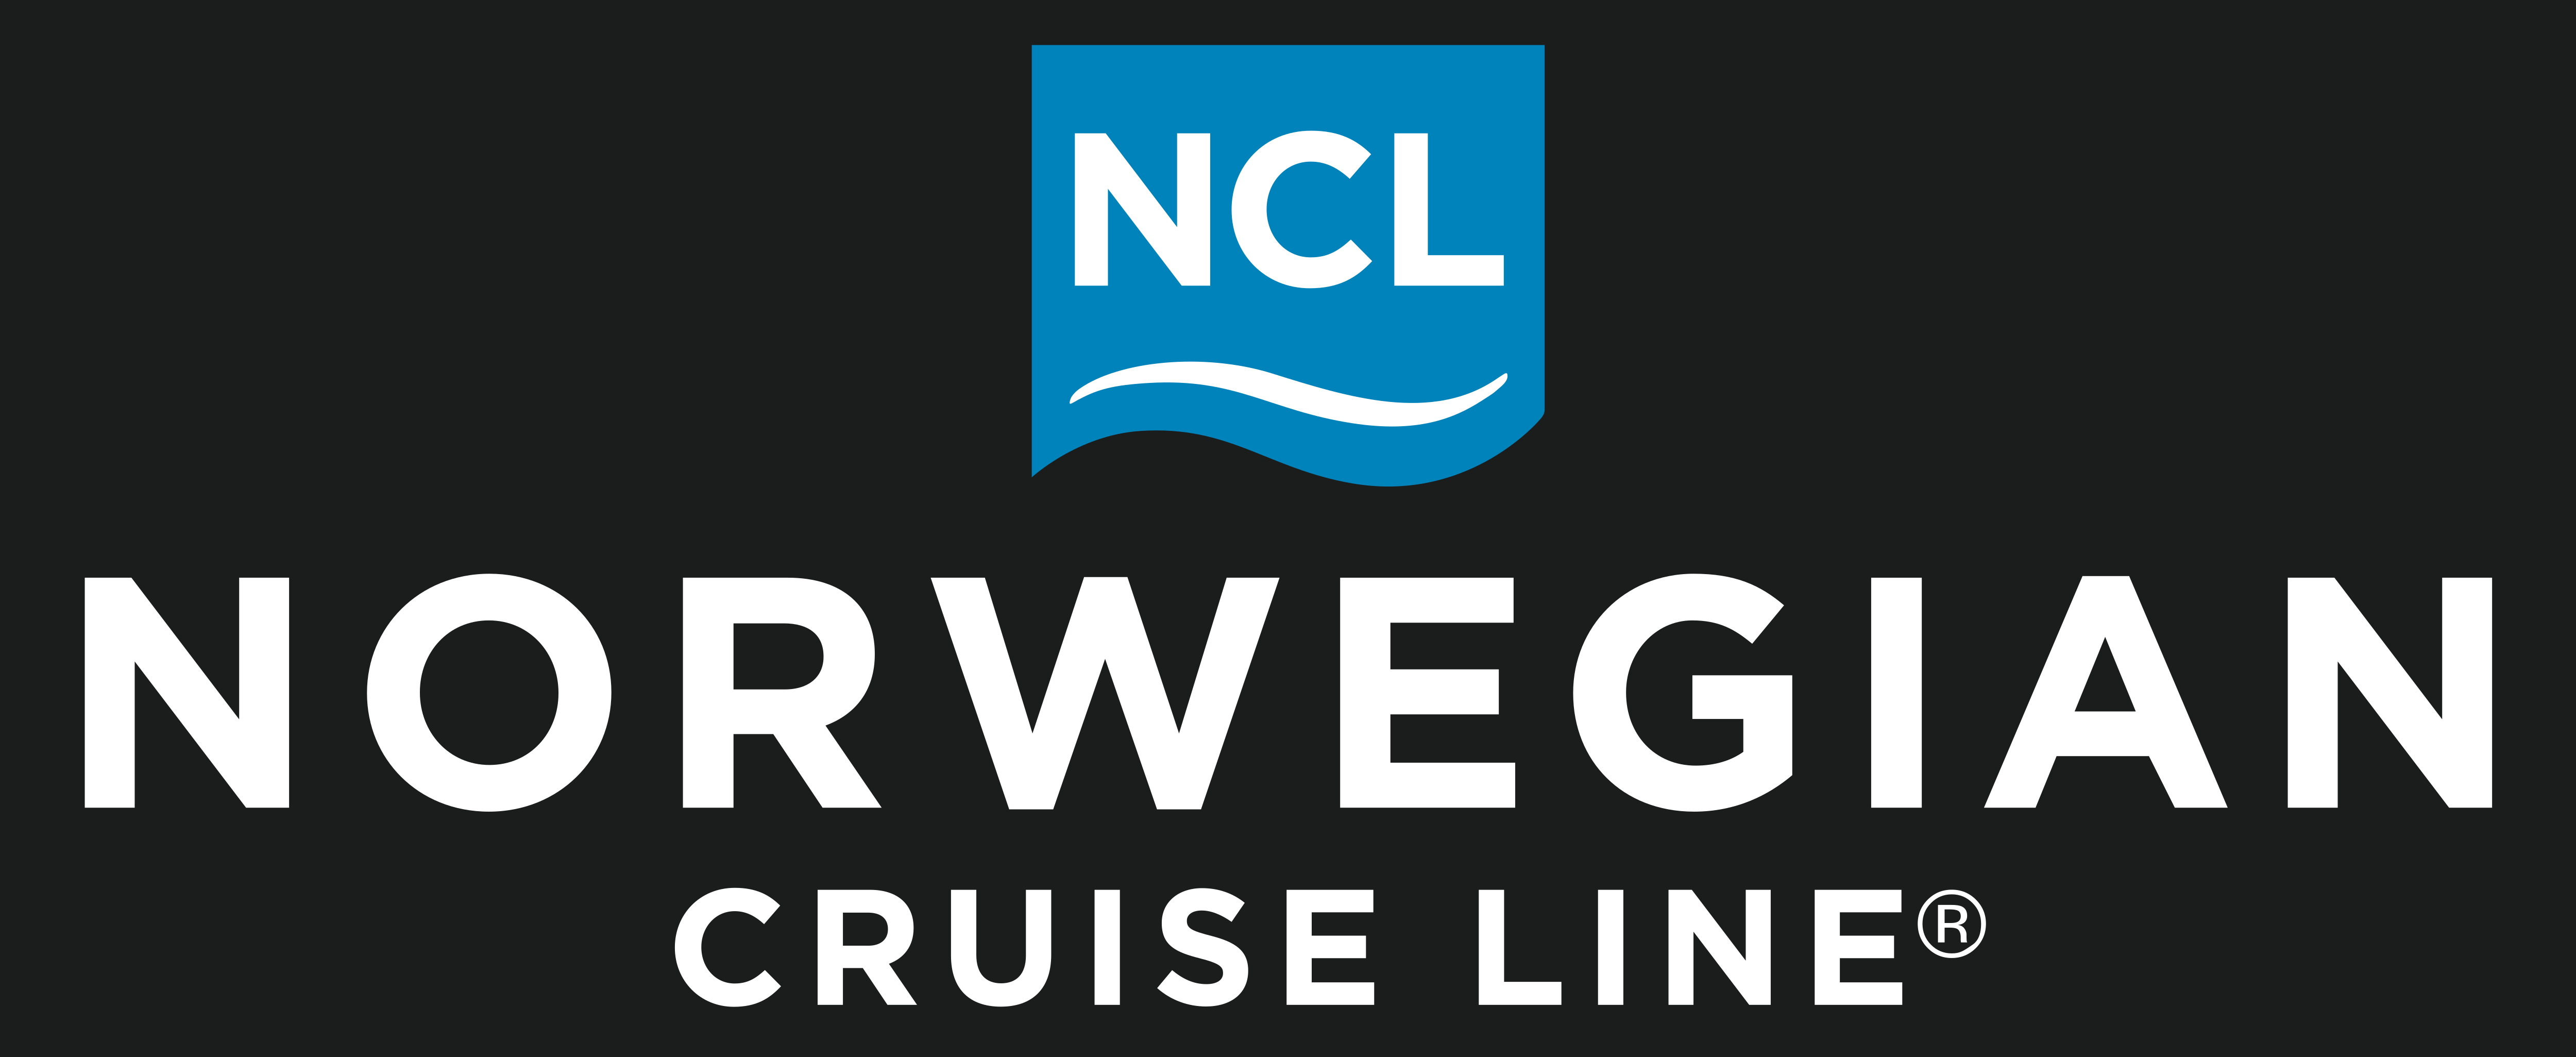 ncl cruise logo